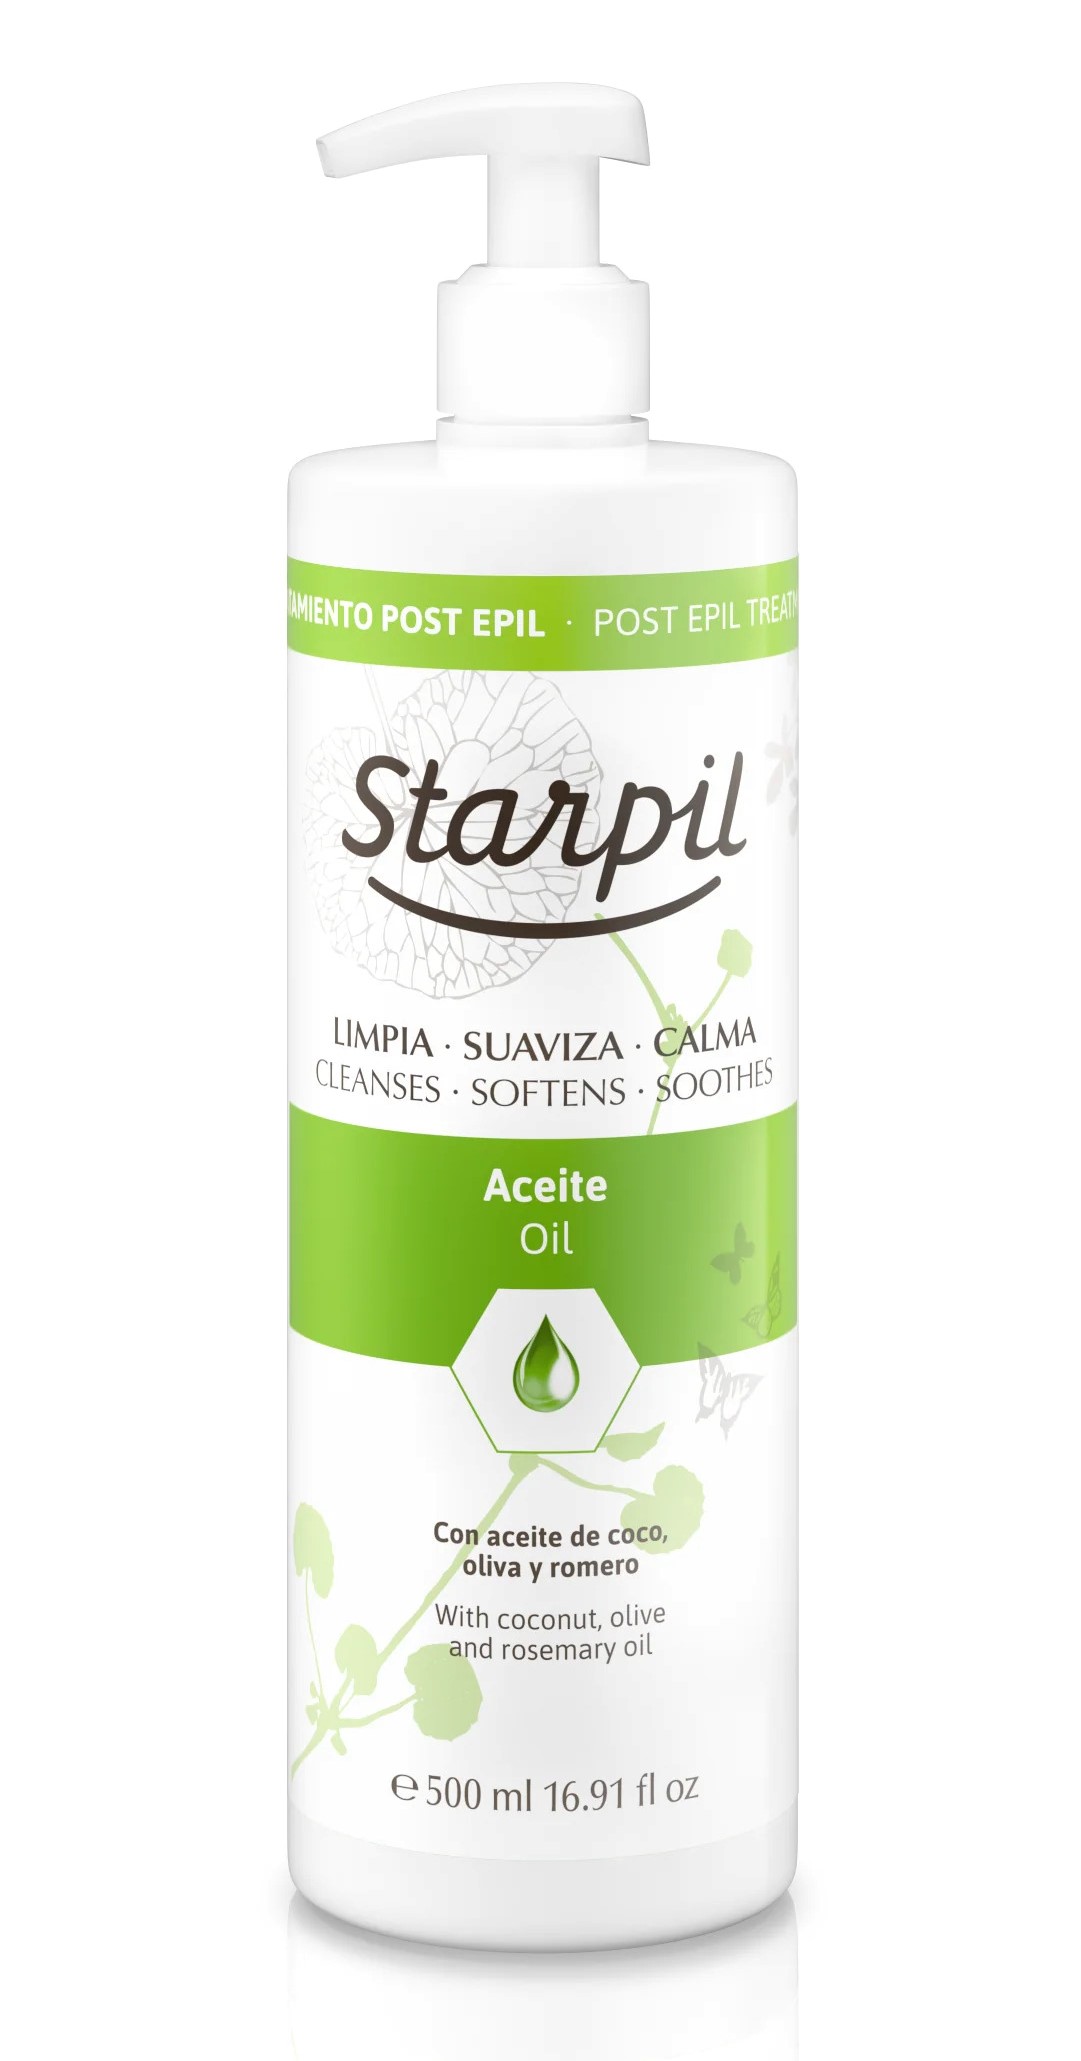 Starpil Post Epil Oil 500 ml.